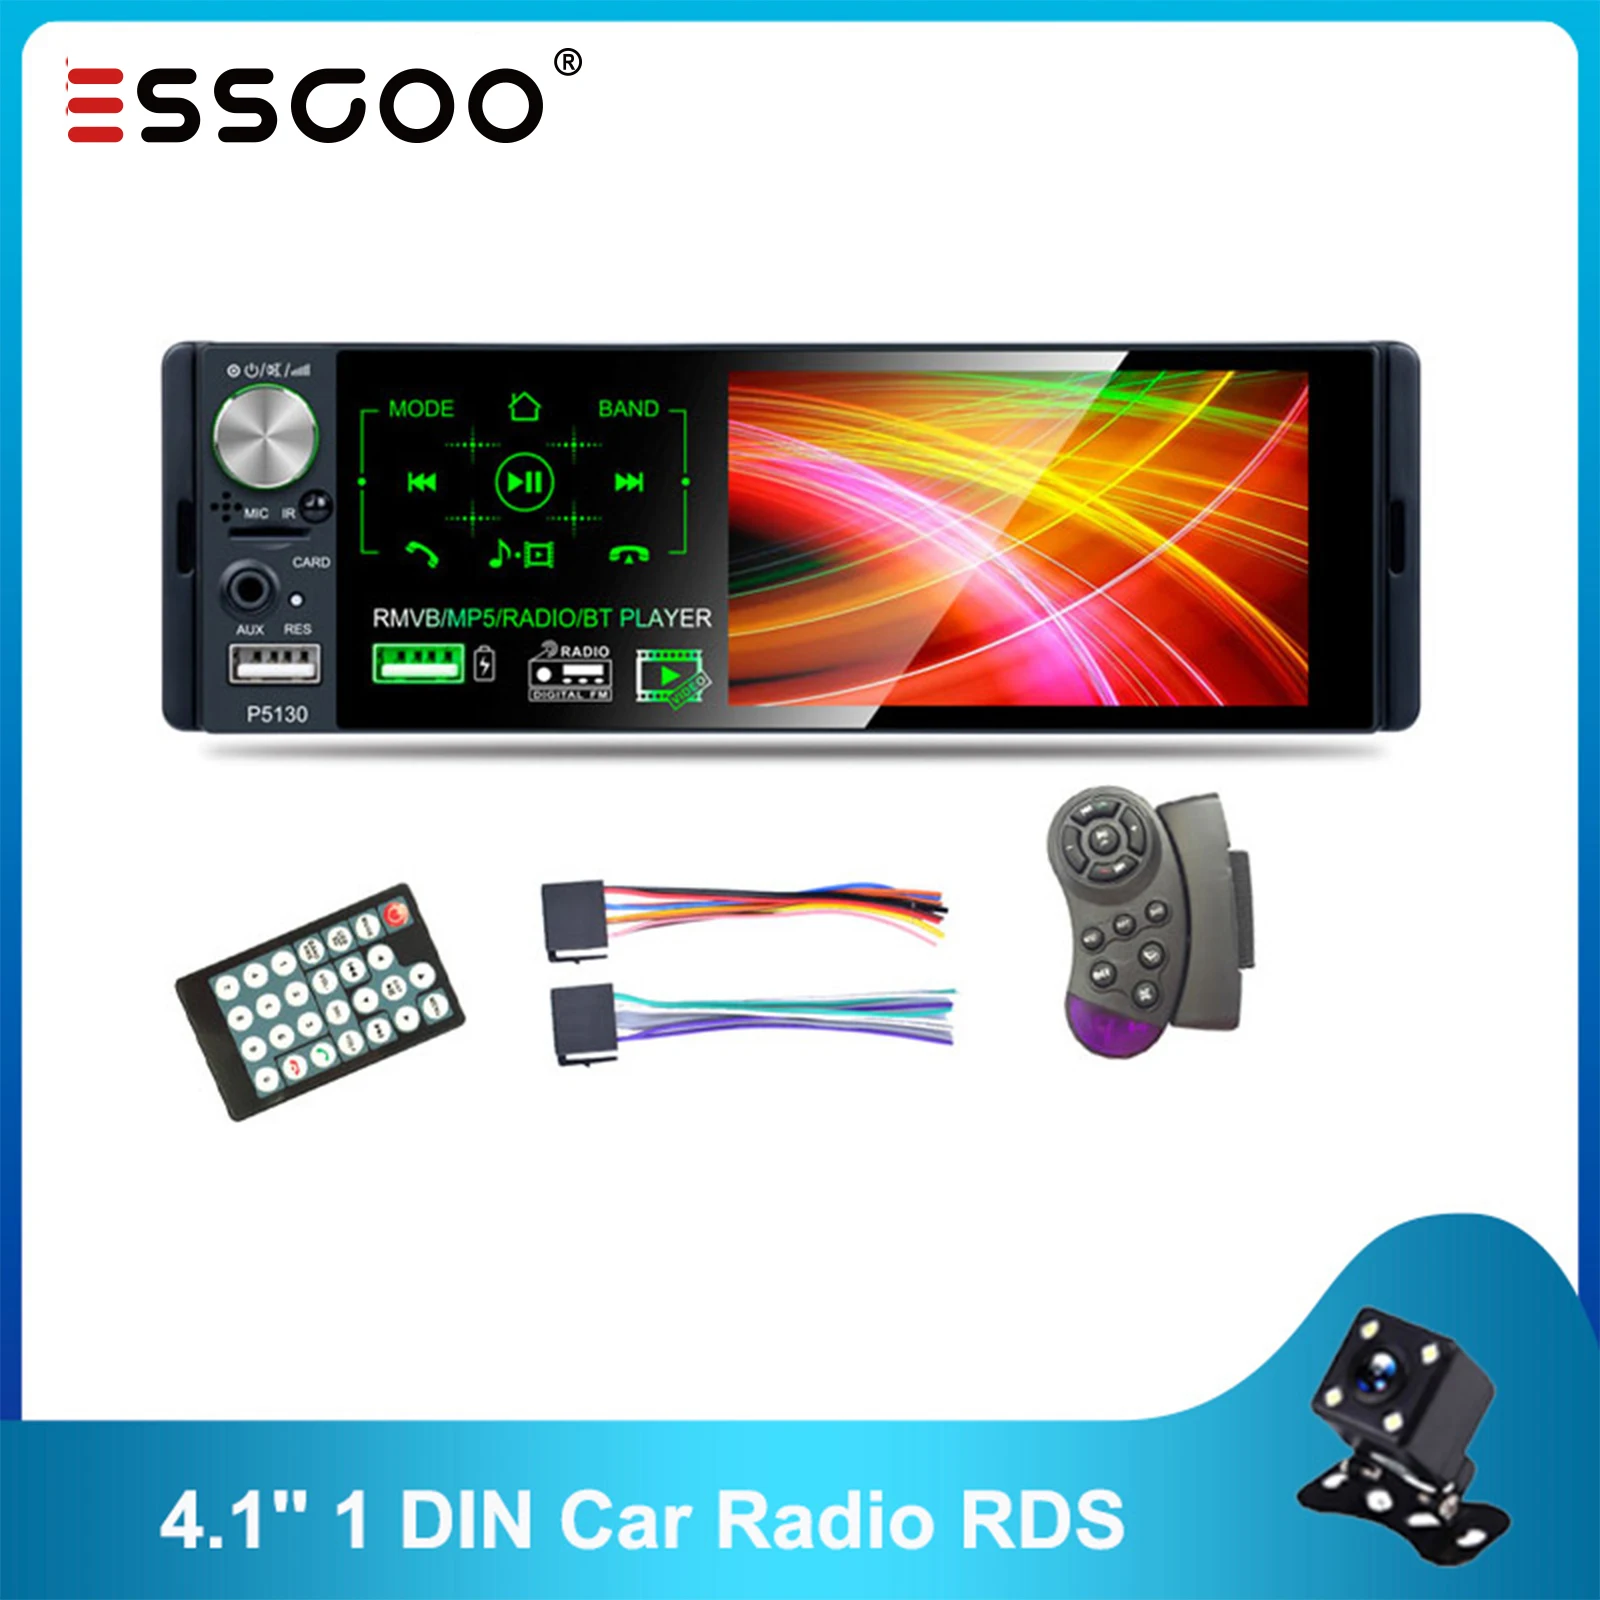 

ESSGOO 4.1'' Car Radio 1 DIN RDS AM BT FM TFT Screen Autoradio Stereo USB TF AUX Supports Rearview Camera Steering Wheel Control